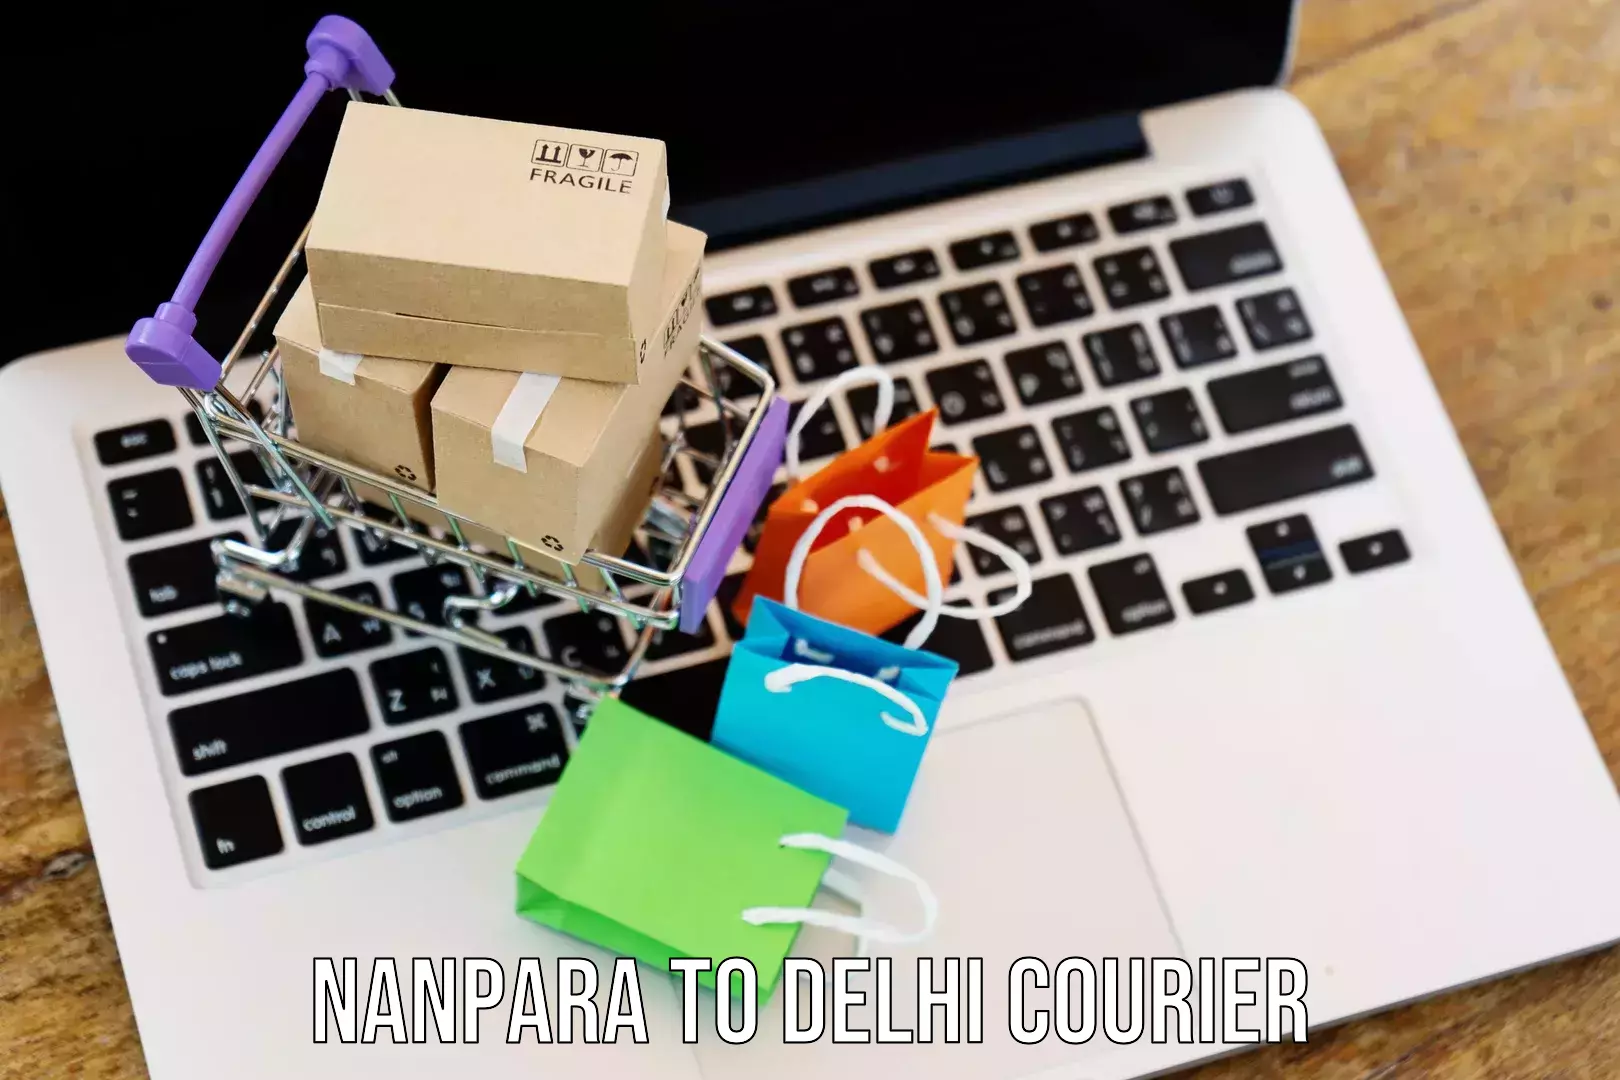 Cash on delivery service Nanpara to East Delhi